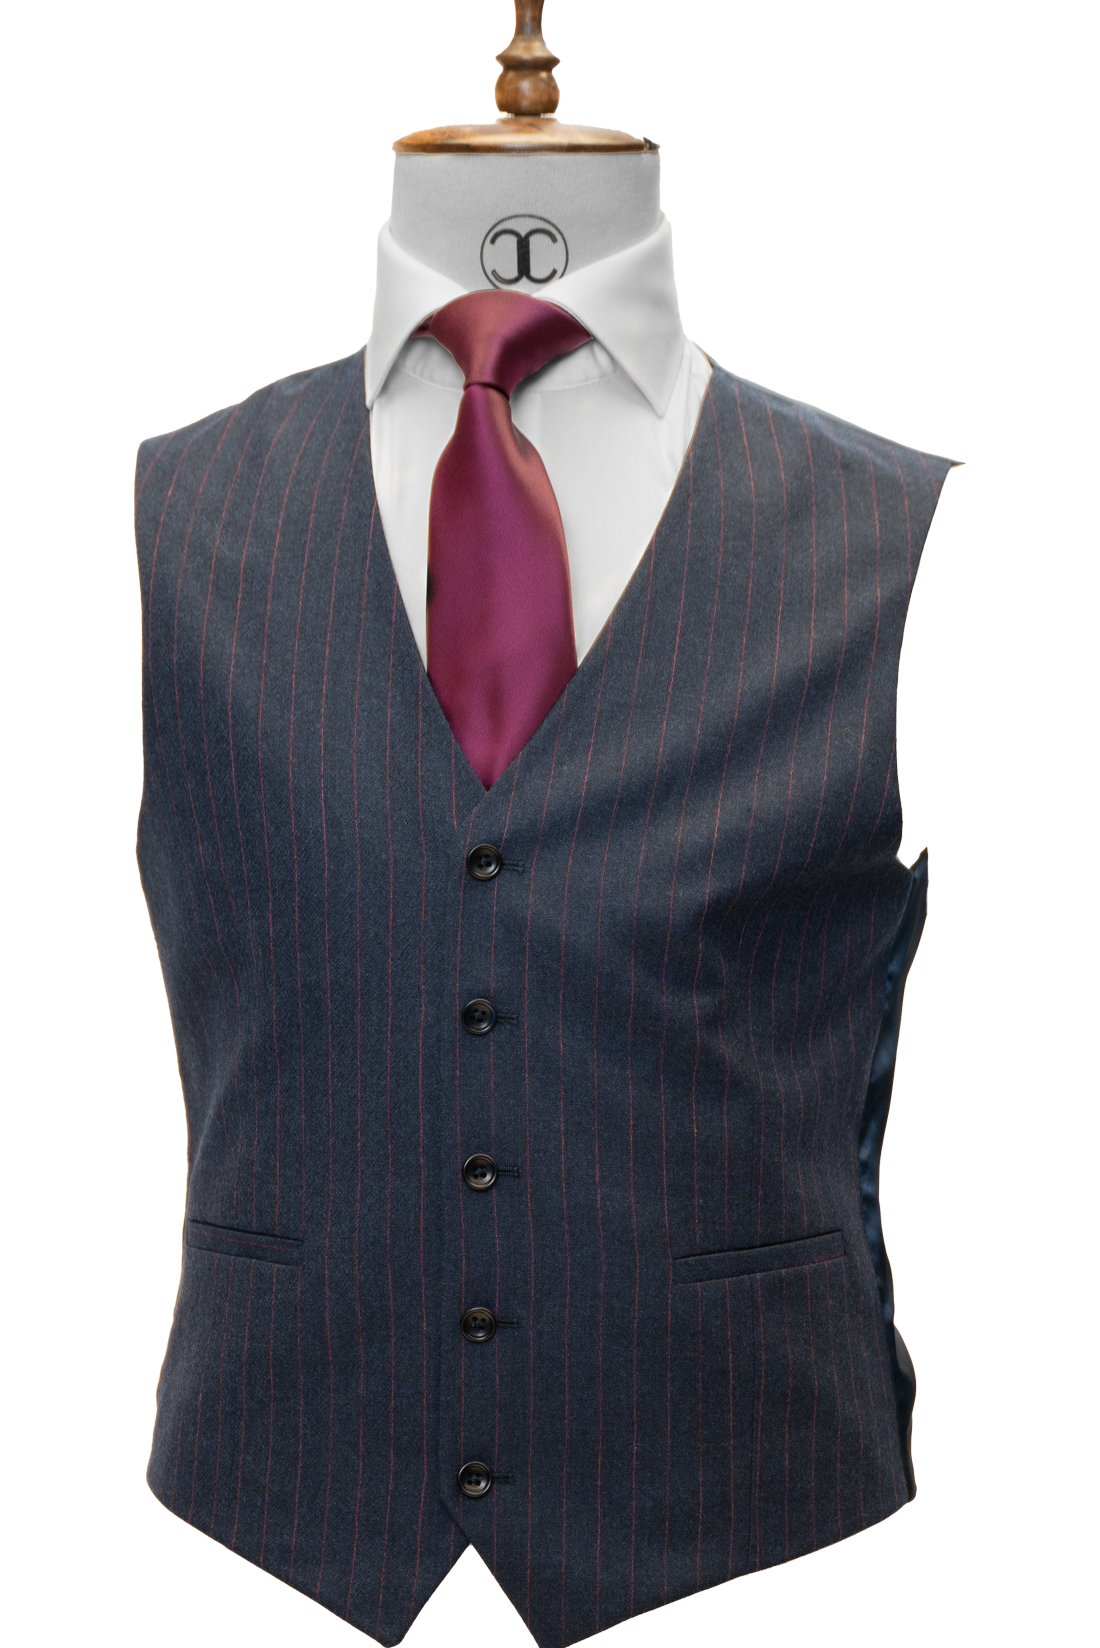 Zignone - Navy Blue with Fuchsia Pinstripes Cashmere 3-Piece Slim Fit Suit